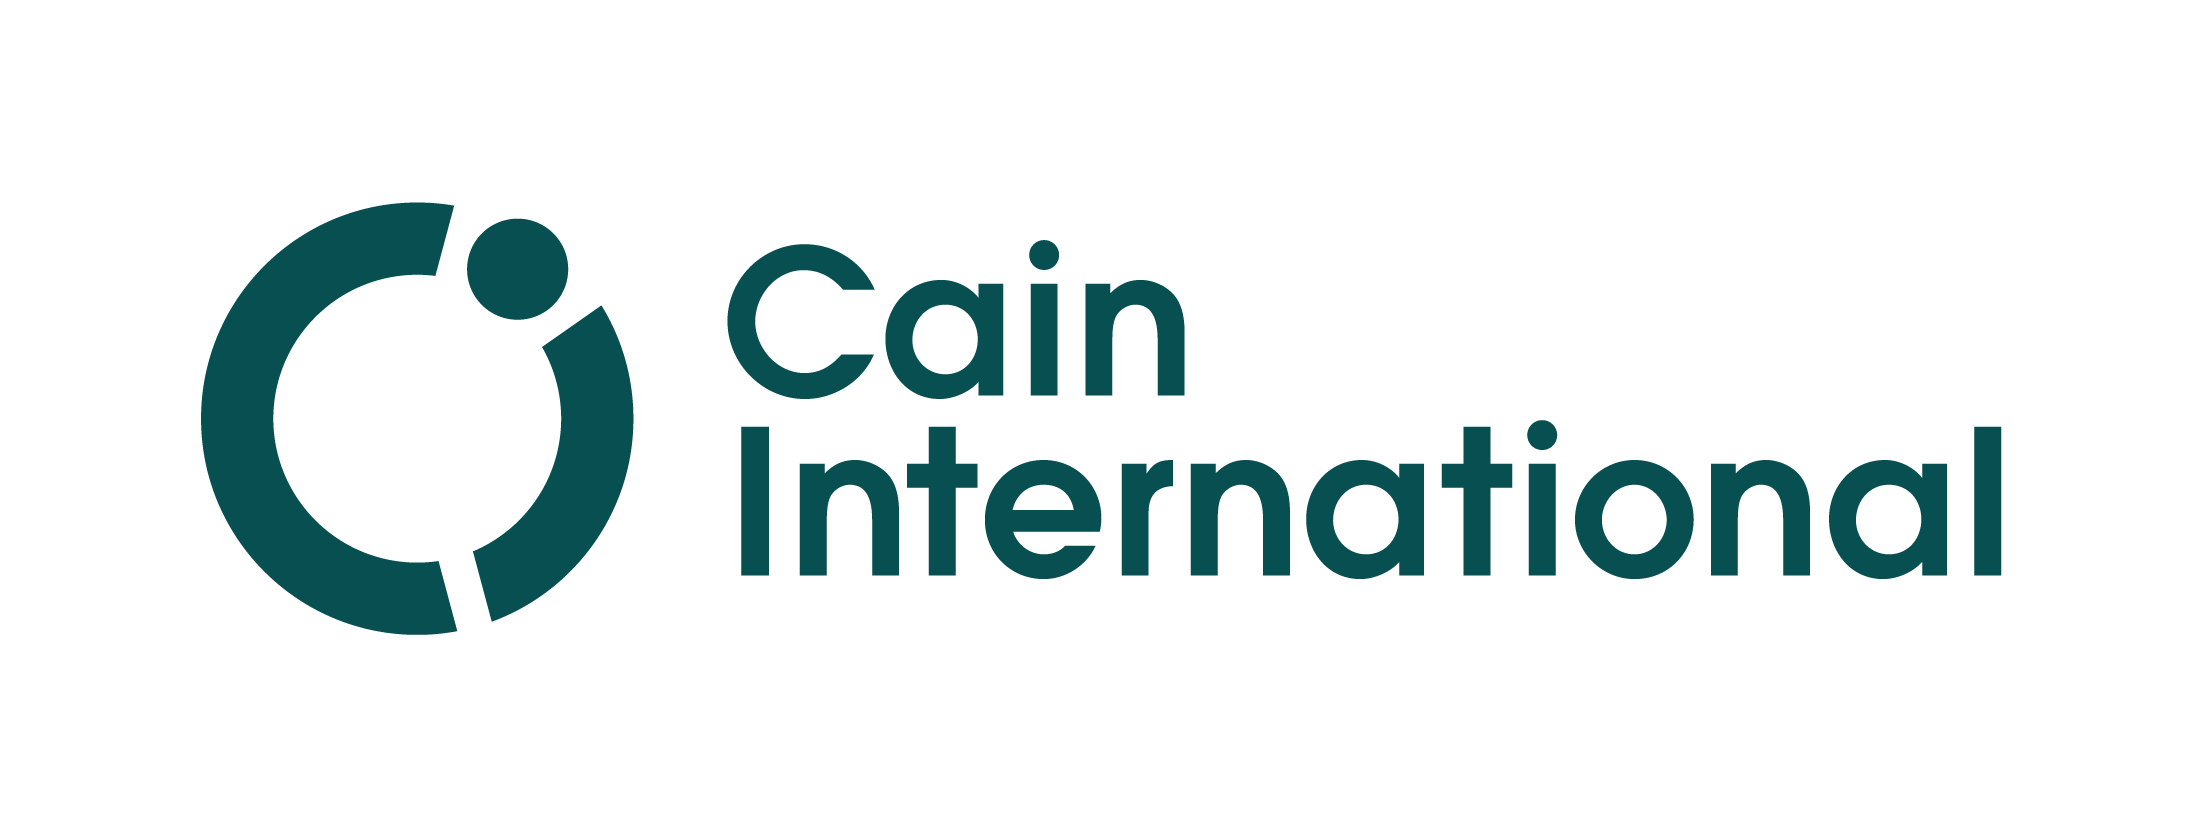 Cain International